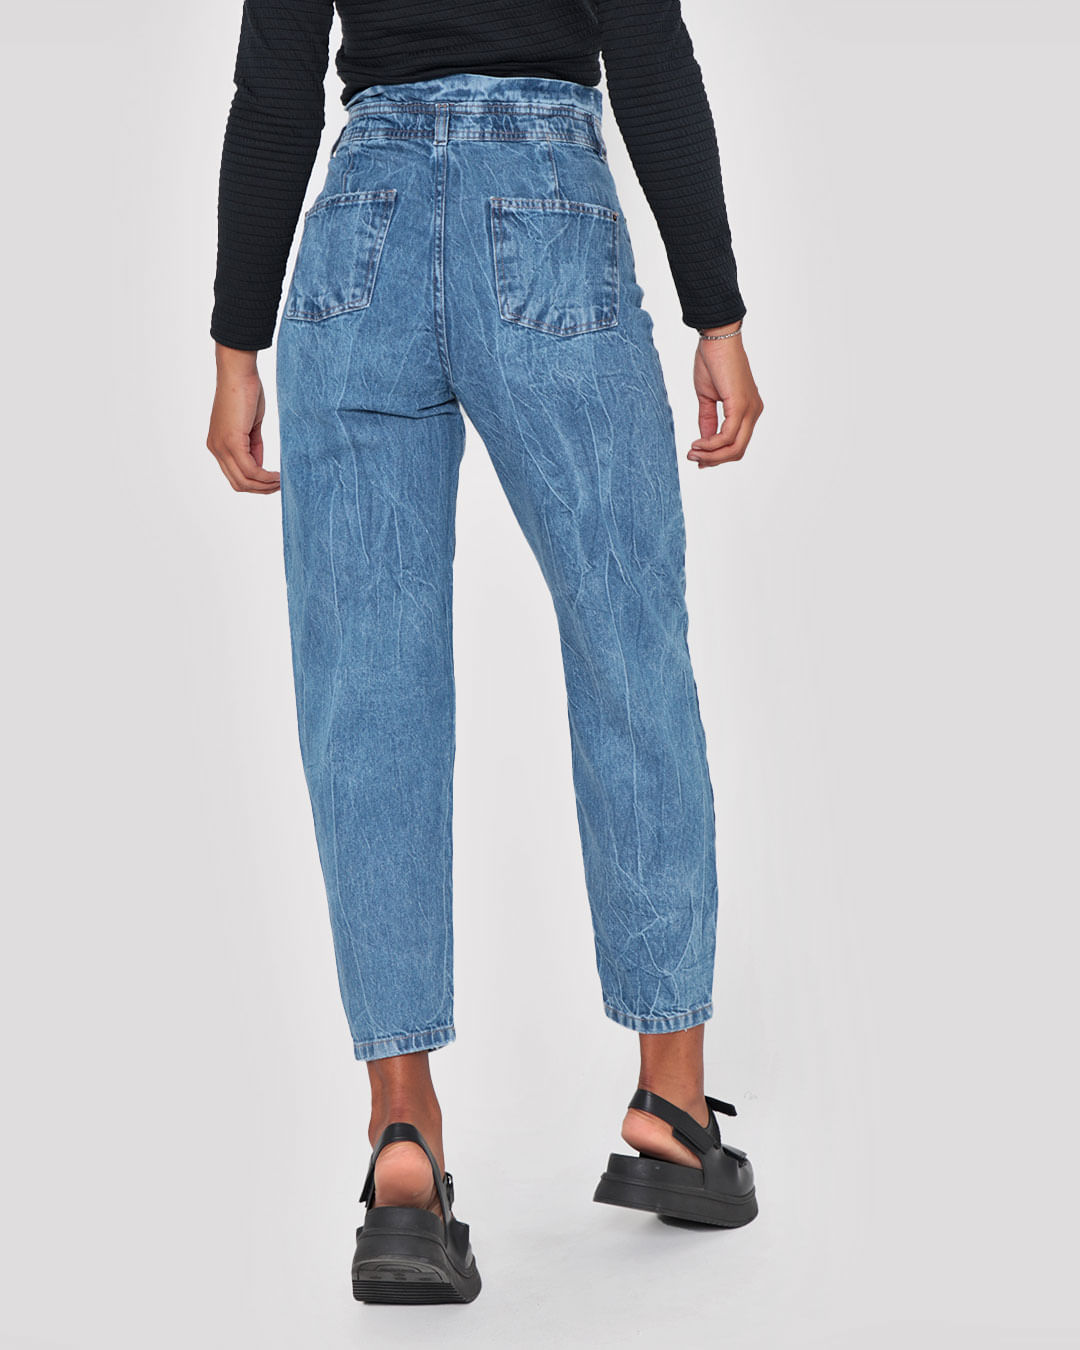 WIDE LEG C/CINTO - Loony Jeans - Moda Feminina Plus Size e